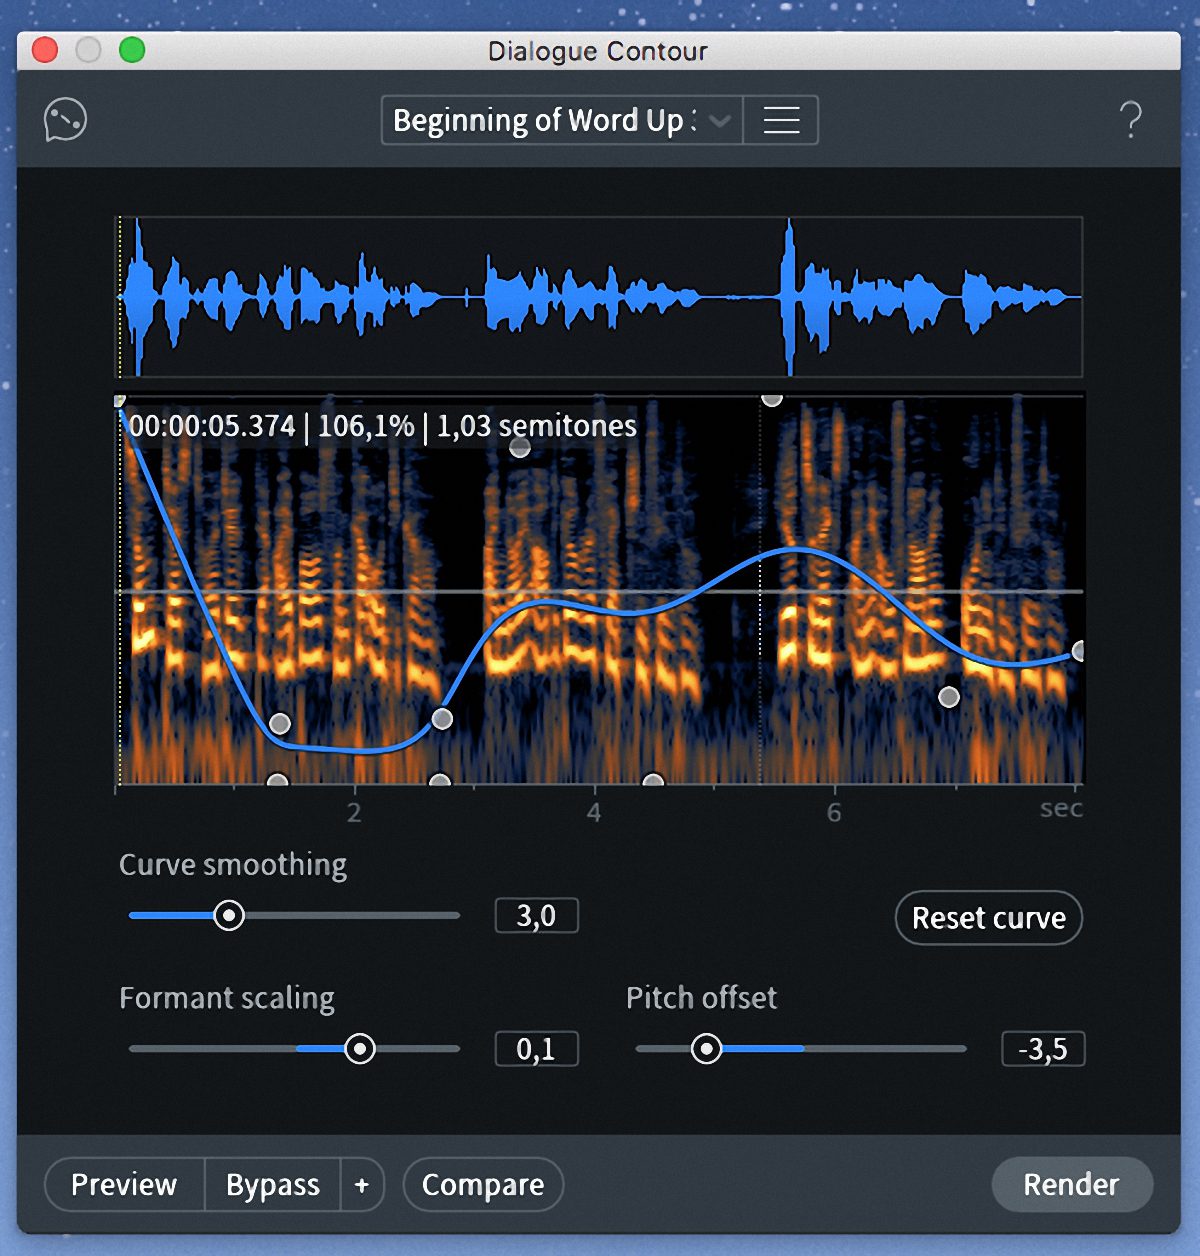 rx7 audio editor free download mac